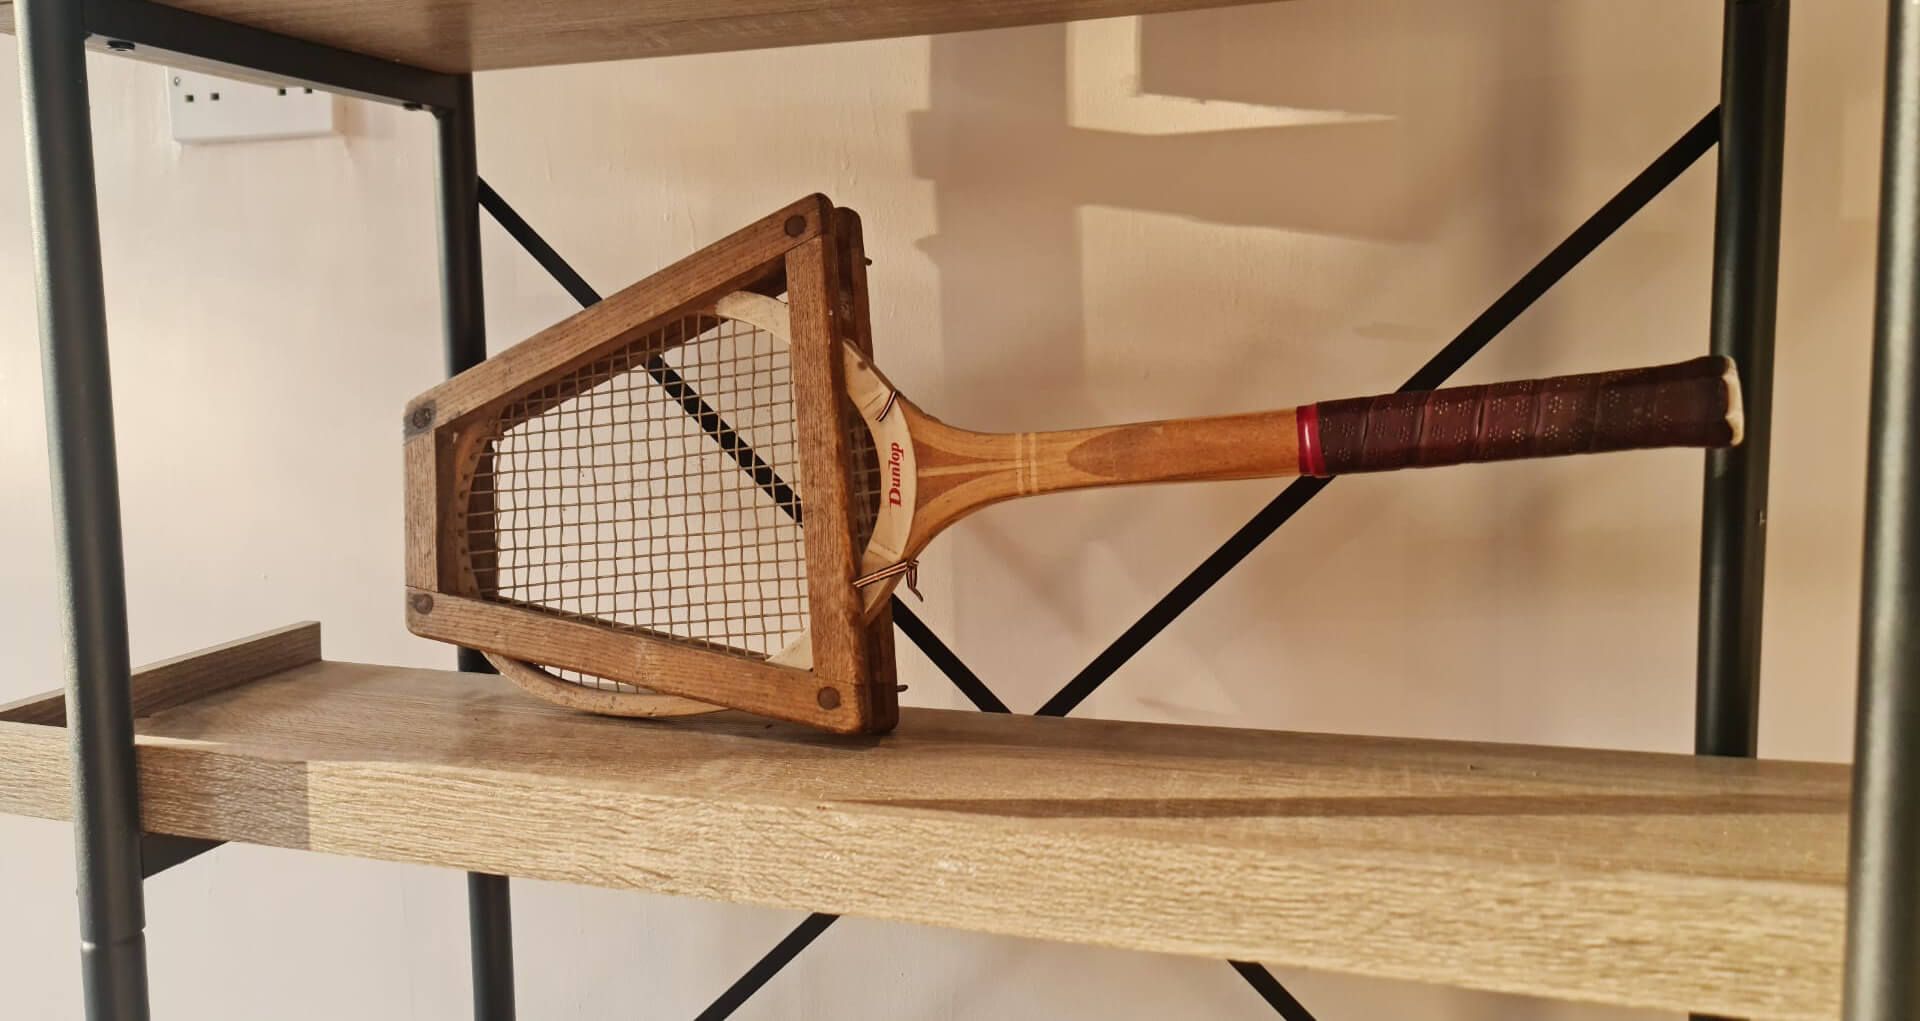 Tennis racket on shelf inside bespoke gym